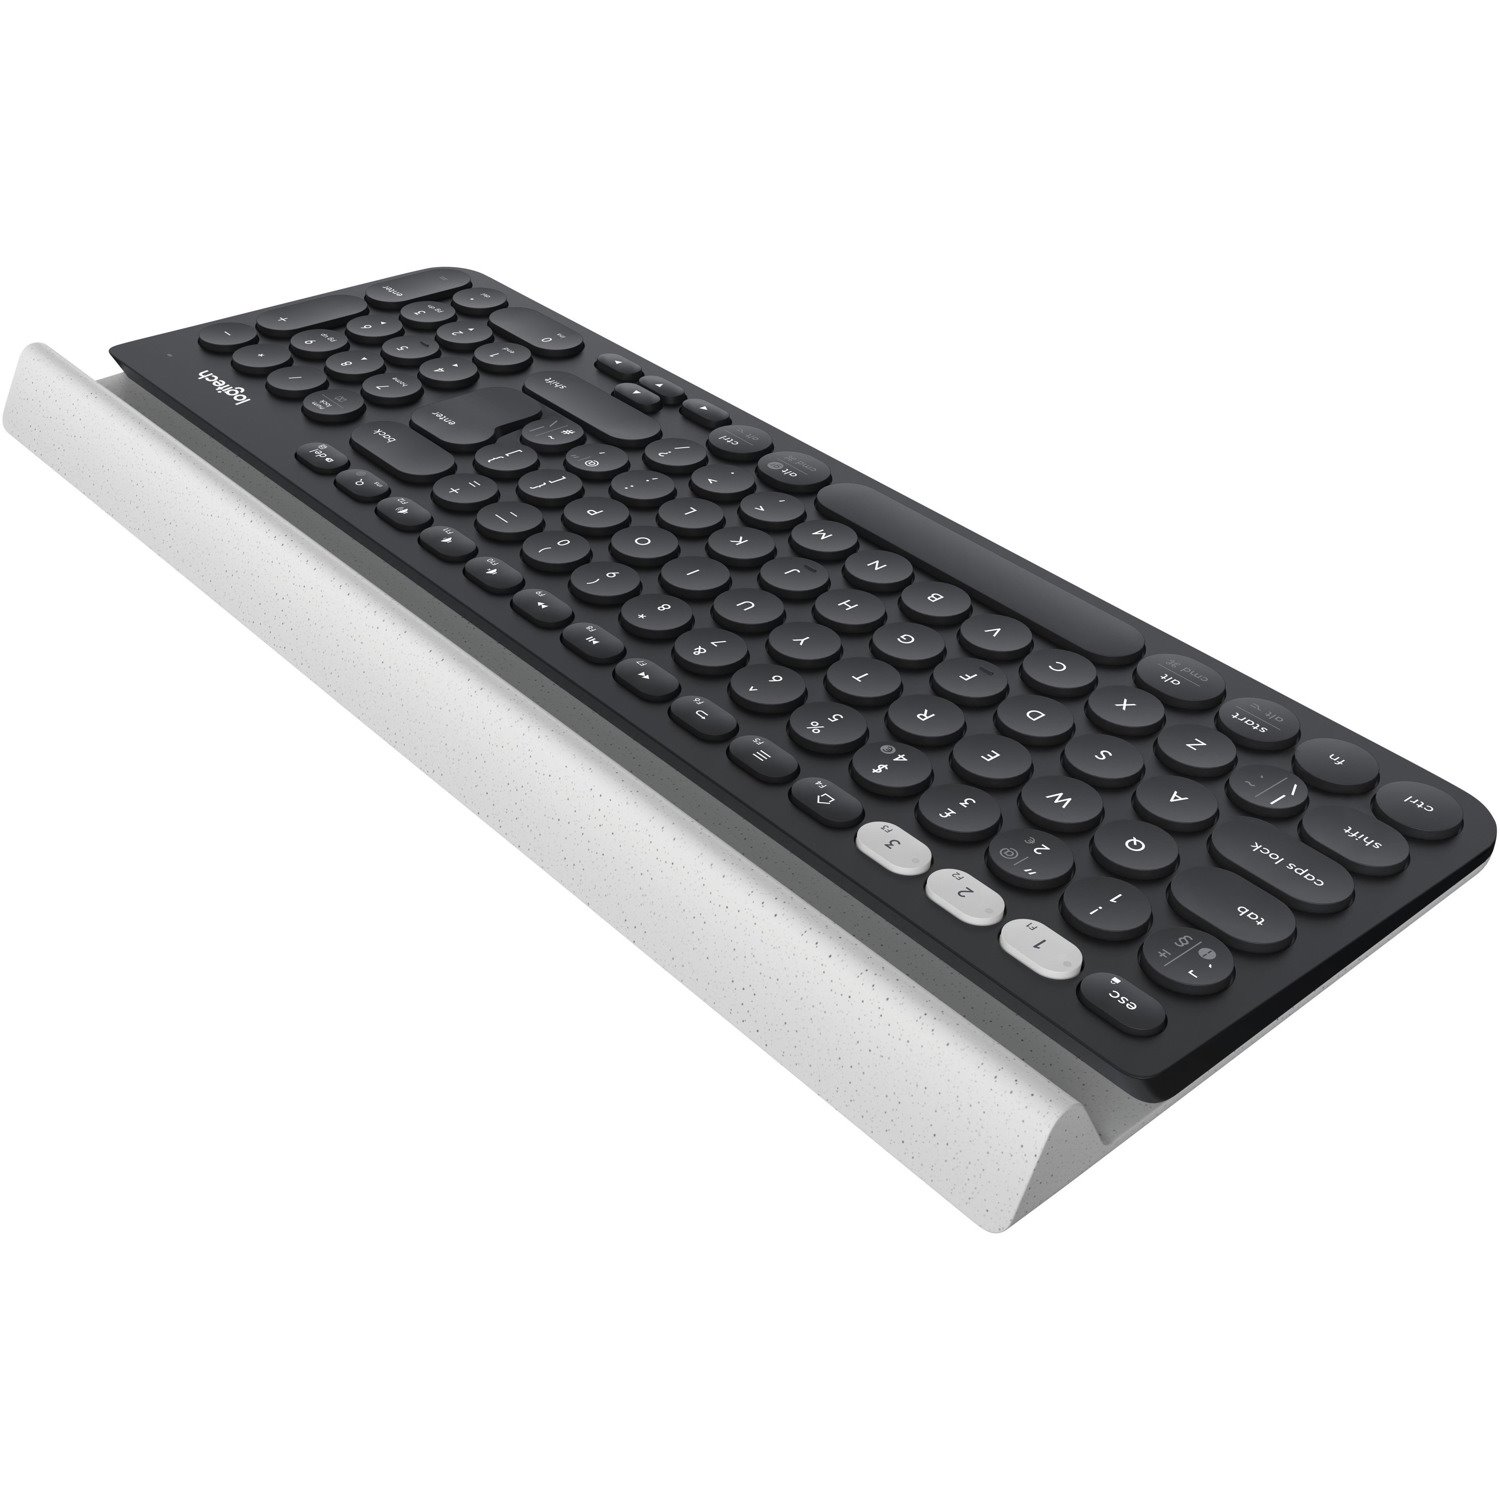 Logitech K780 Keyboard - Wireless Connectivity - USB Interface - Black, Grey